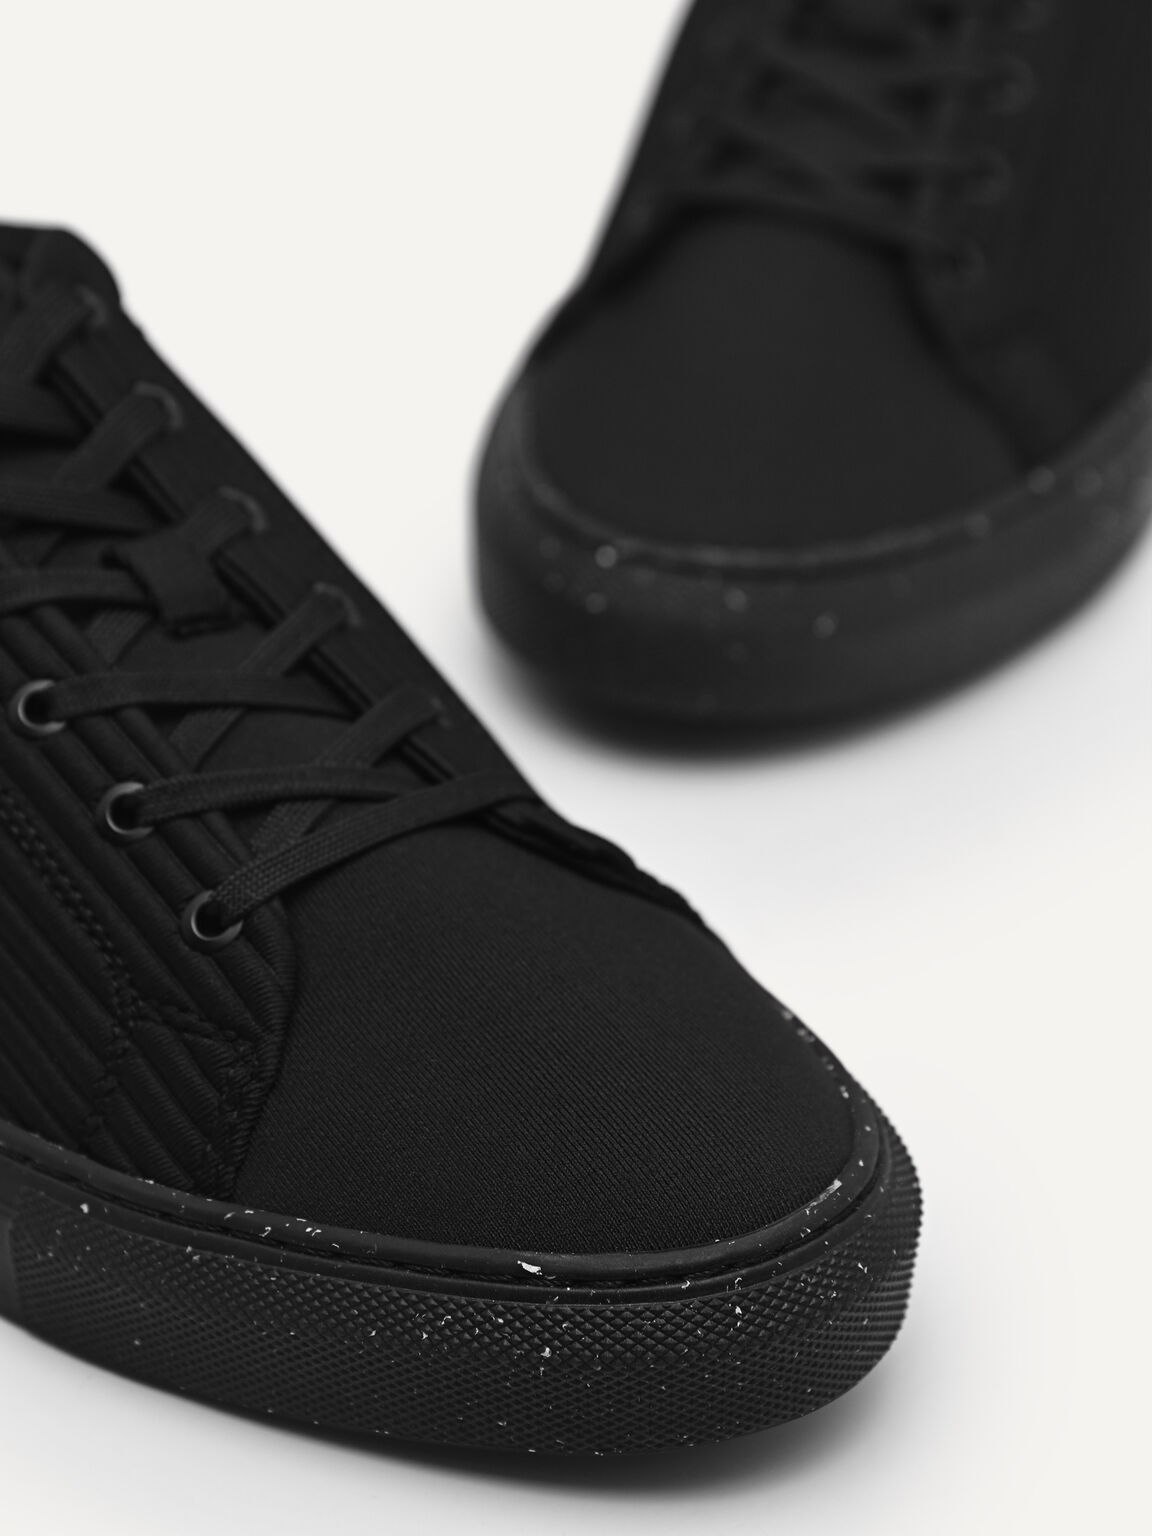 rePEDRO Pleated Sneakers, Black, hi-res